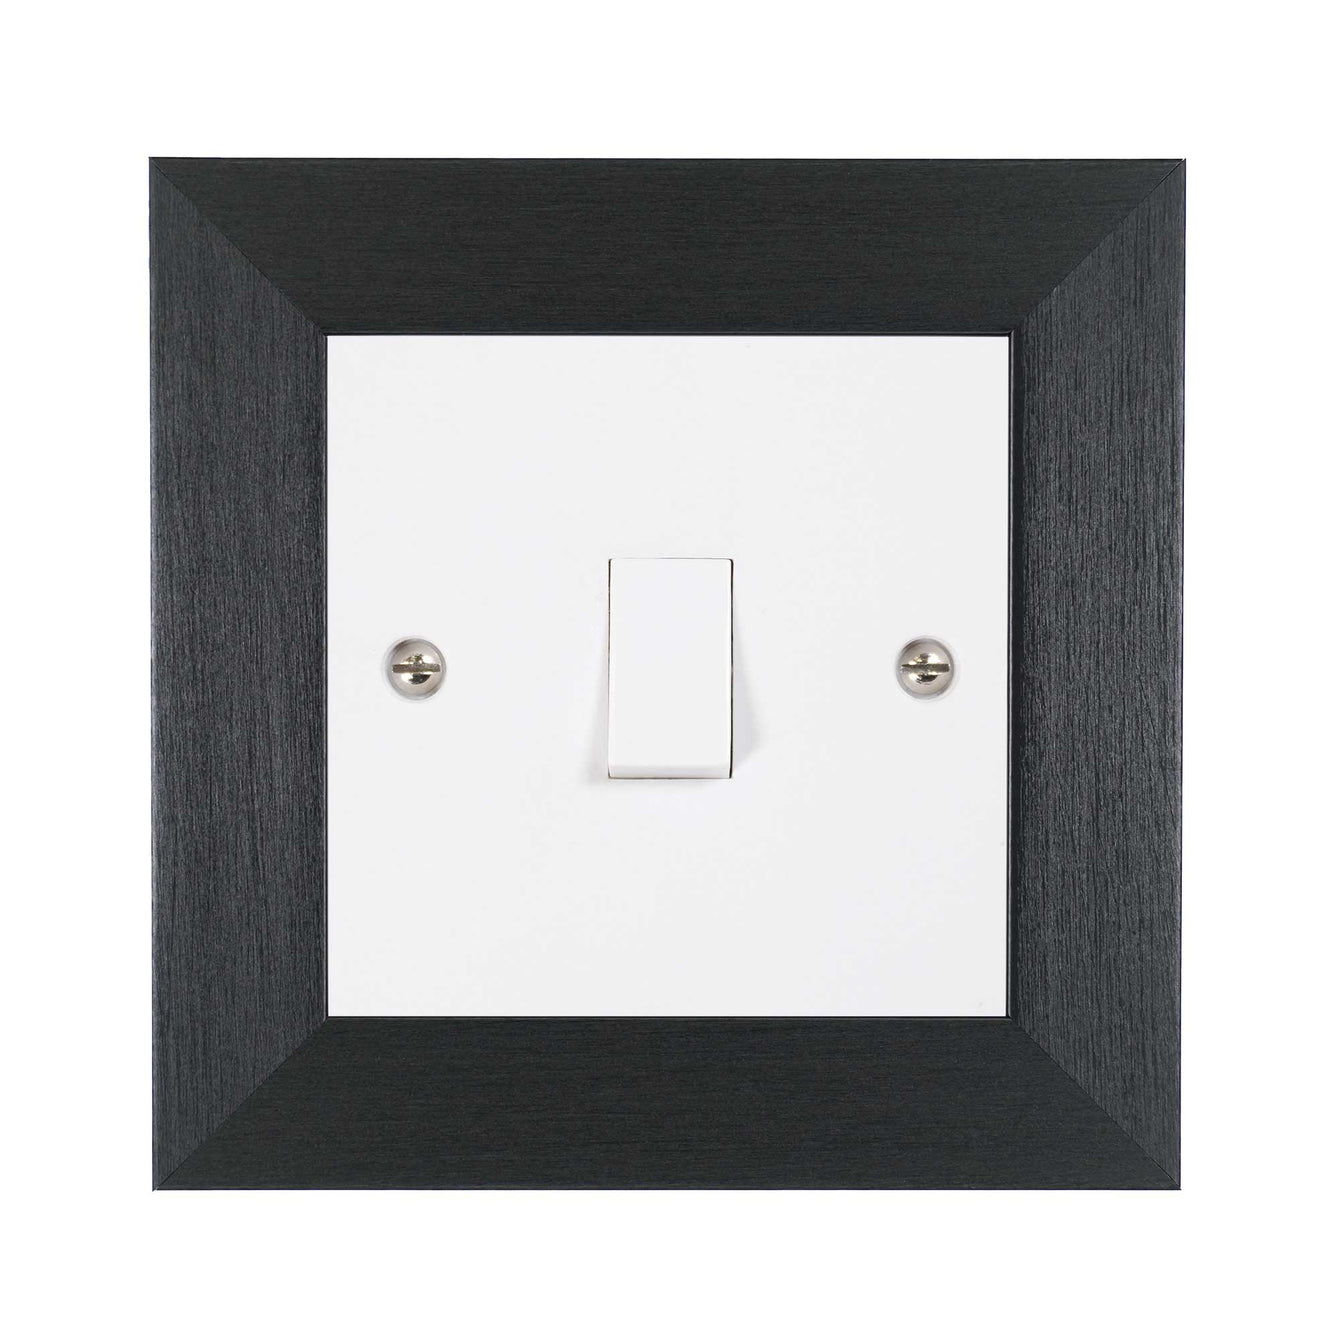 ElekTek Decorative Switch Surround Frame Cover Finger Plate Modena Dark Wood Effects Walnut